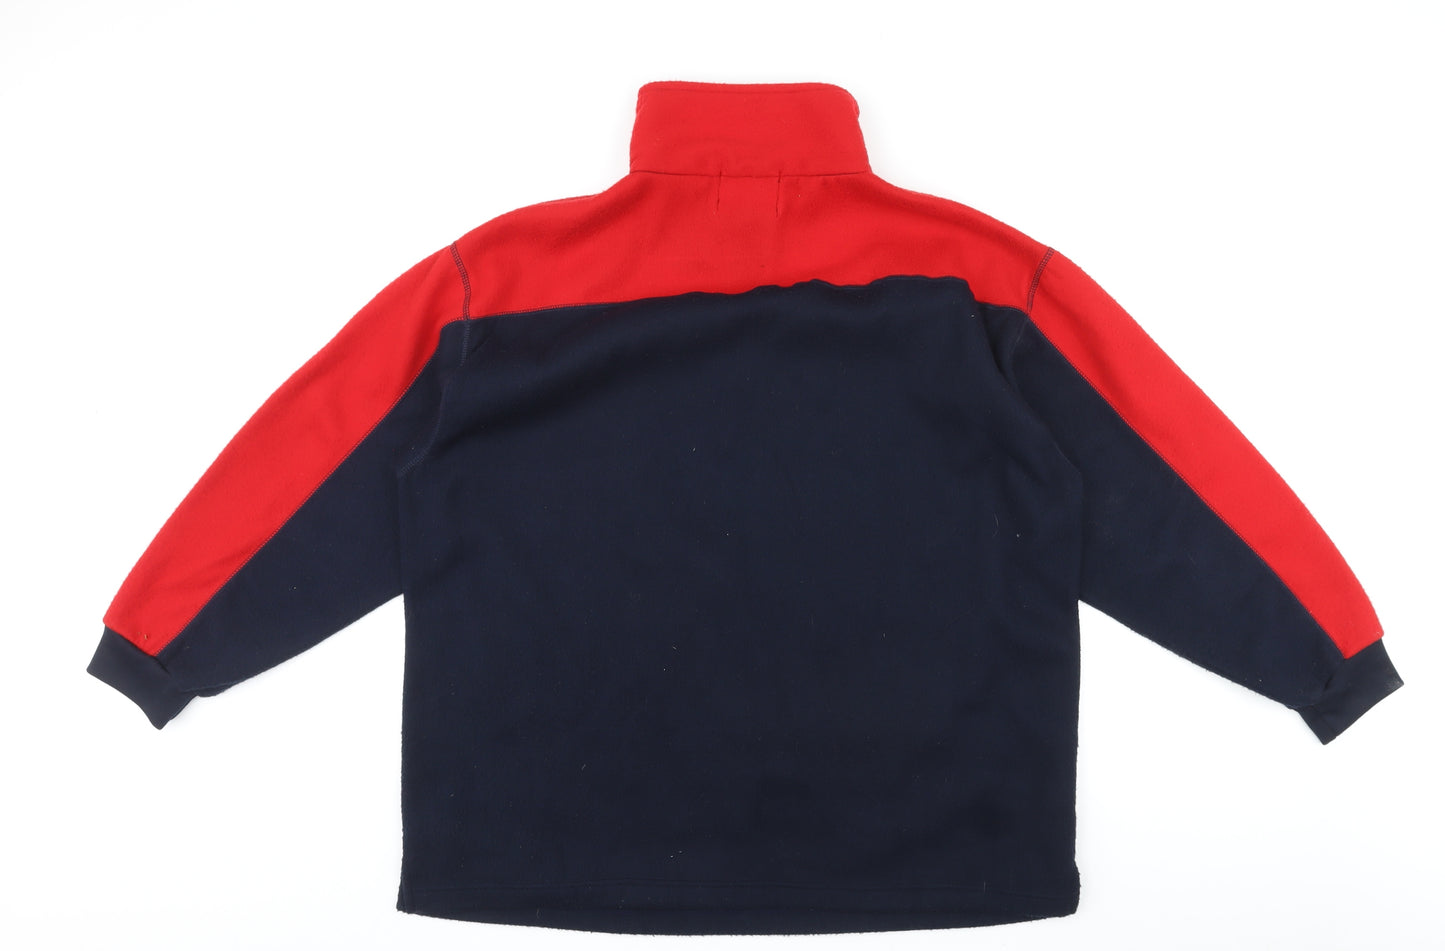 Alibi Mens Blue Polyester Henley Sweatshirt Size L - 1/4 Zip